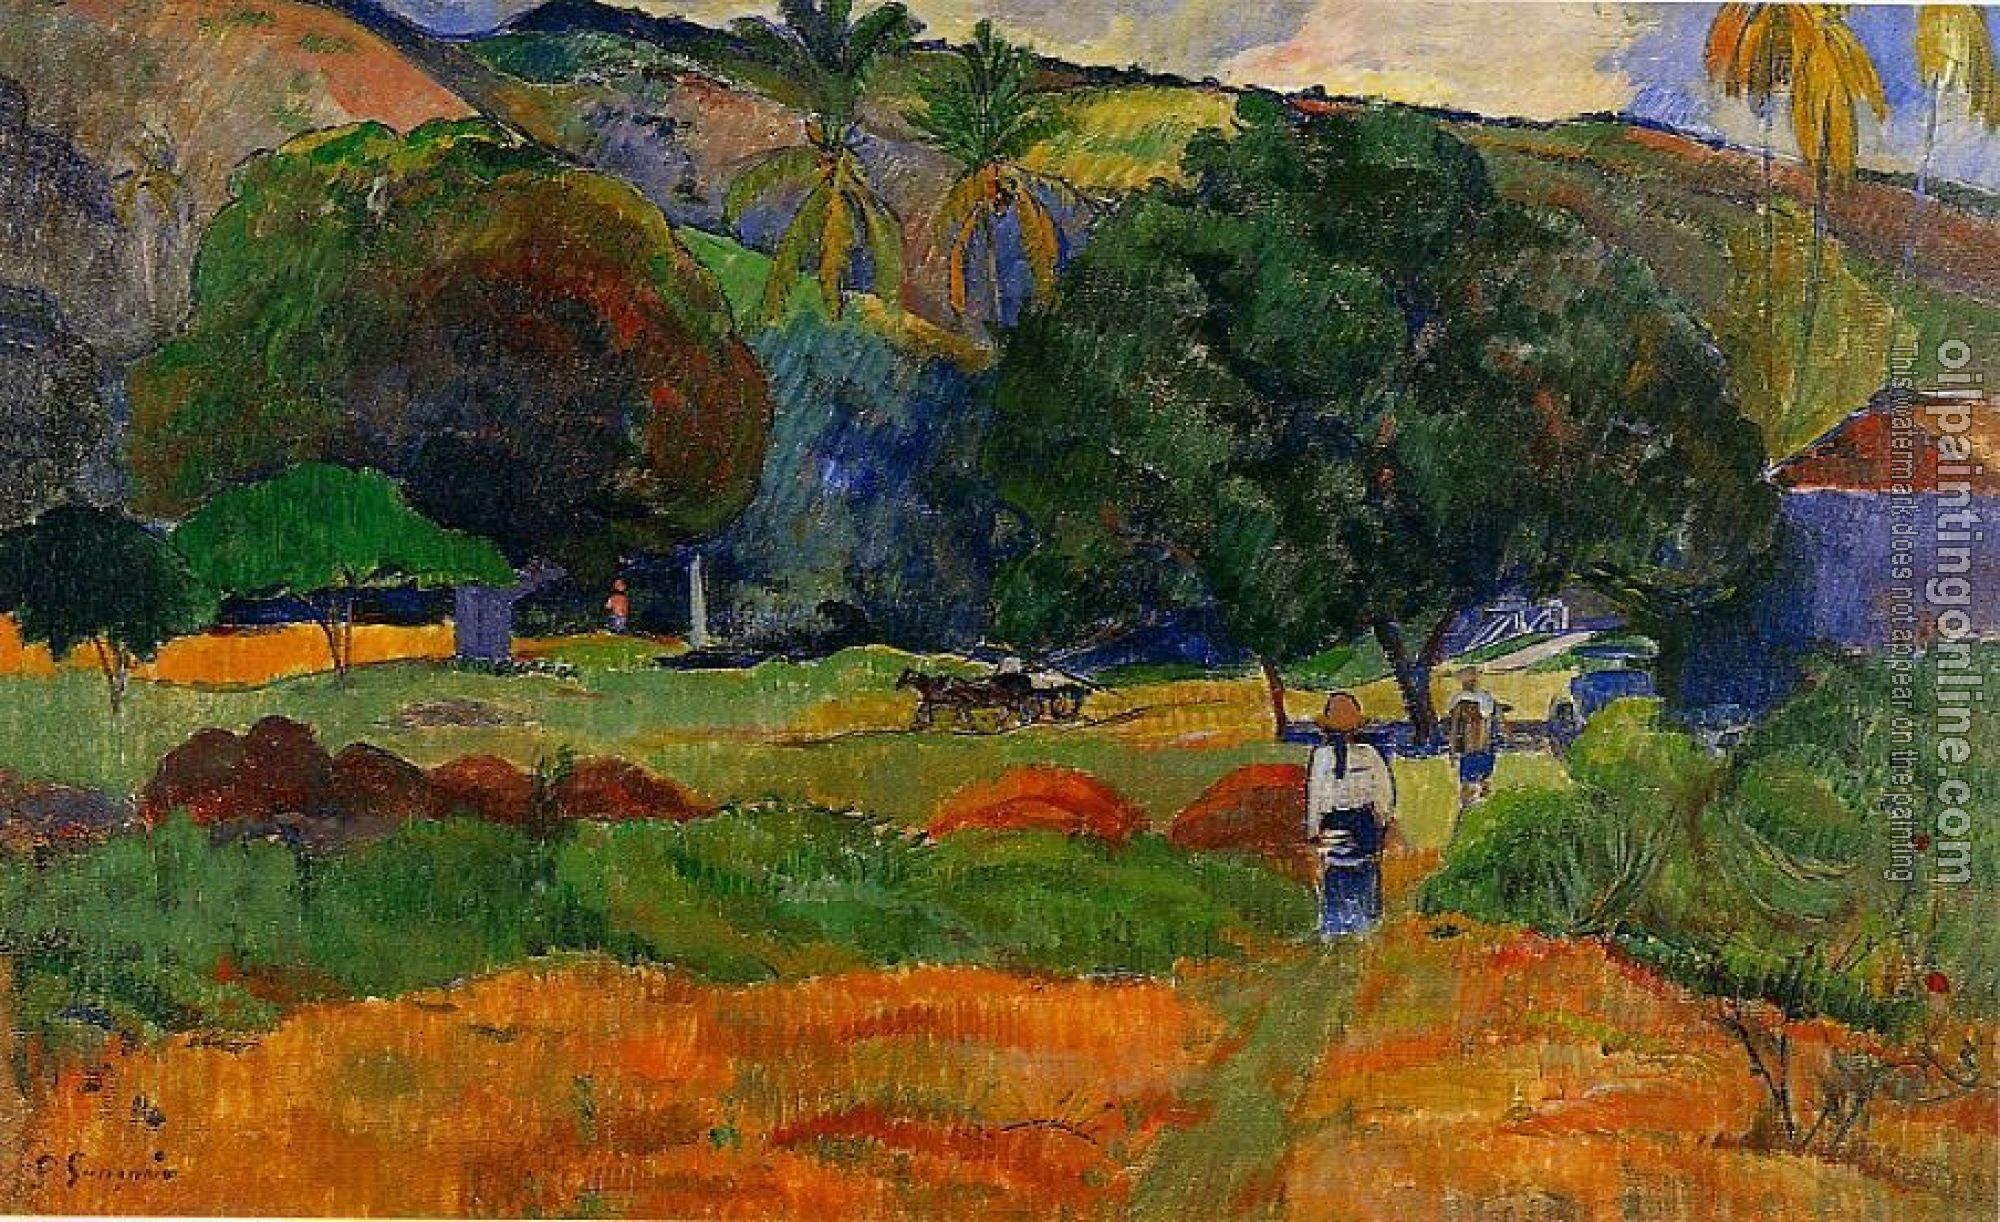 Gauguin, Paul - The Little Valley